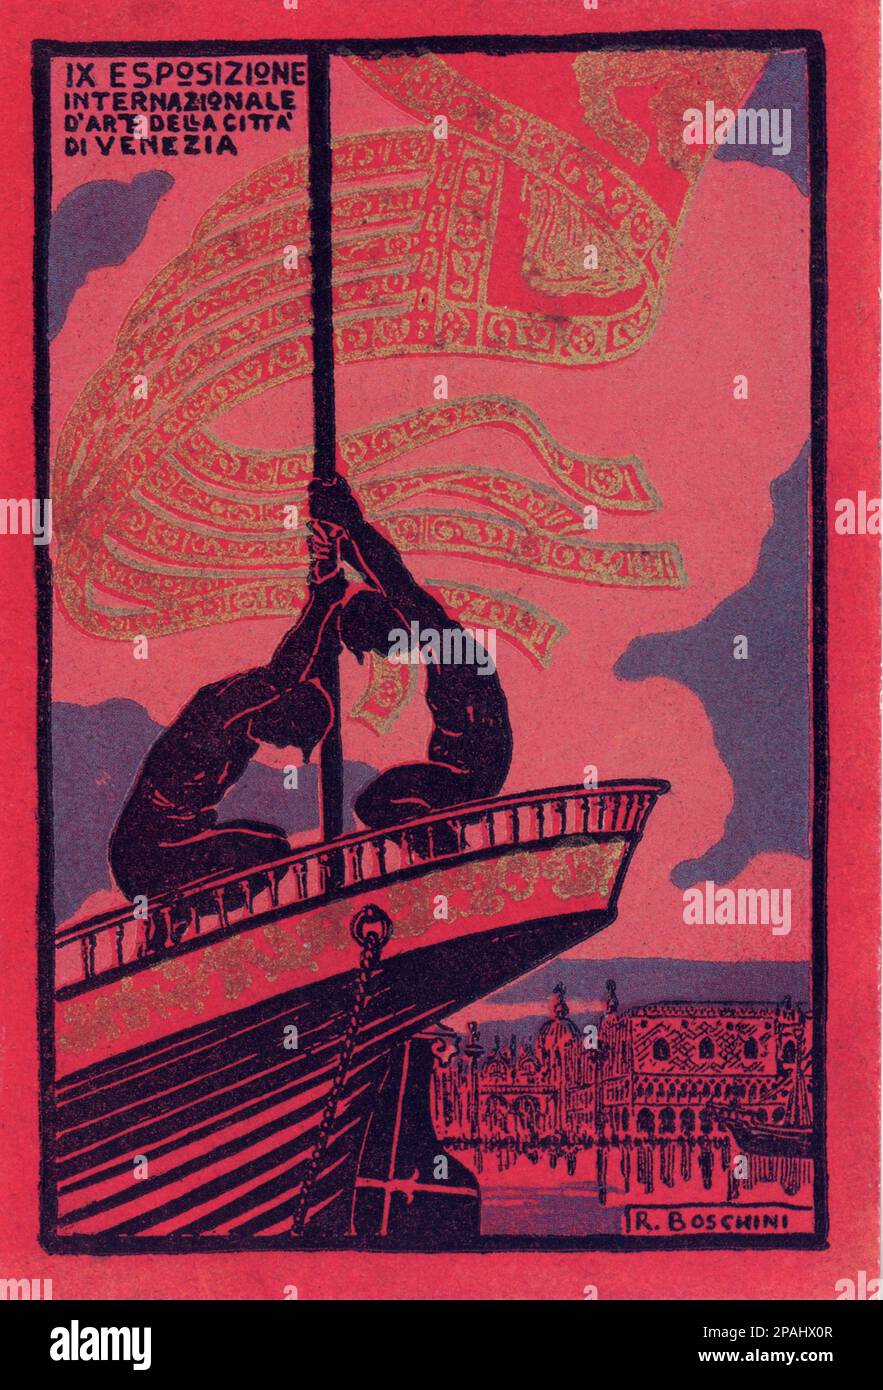 1918, VENEZIA , ITALIE : L'affiche publicitaire de l'IXE ESPOSSIZIONE INTERNAZIONALE d'ARTE DELLA CITTA' DI VENEZIA , oeuvre du peintre illustrateur R. Boschini - LA BIENNALE - pubblicita' - VENISE - ITALIA - FOTO STORICHE - HISTOIRE - GEOGRAFIA - GÉOGRAPHIE - Laguna - VÉNÉTIE - - - ARTE - ARTS ---- Archivio GBB Banque D'Images